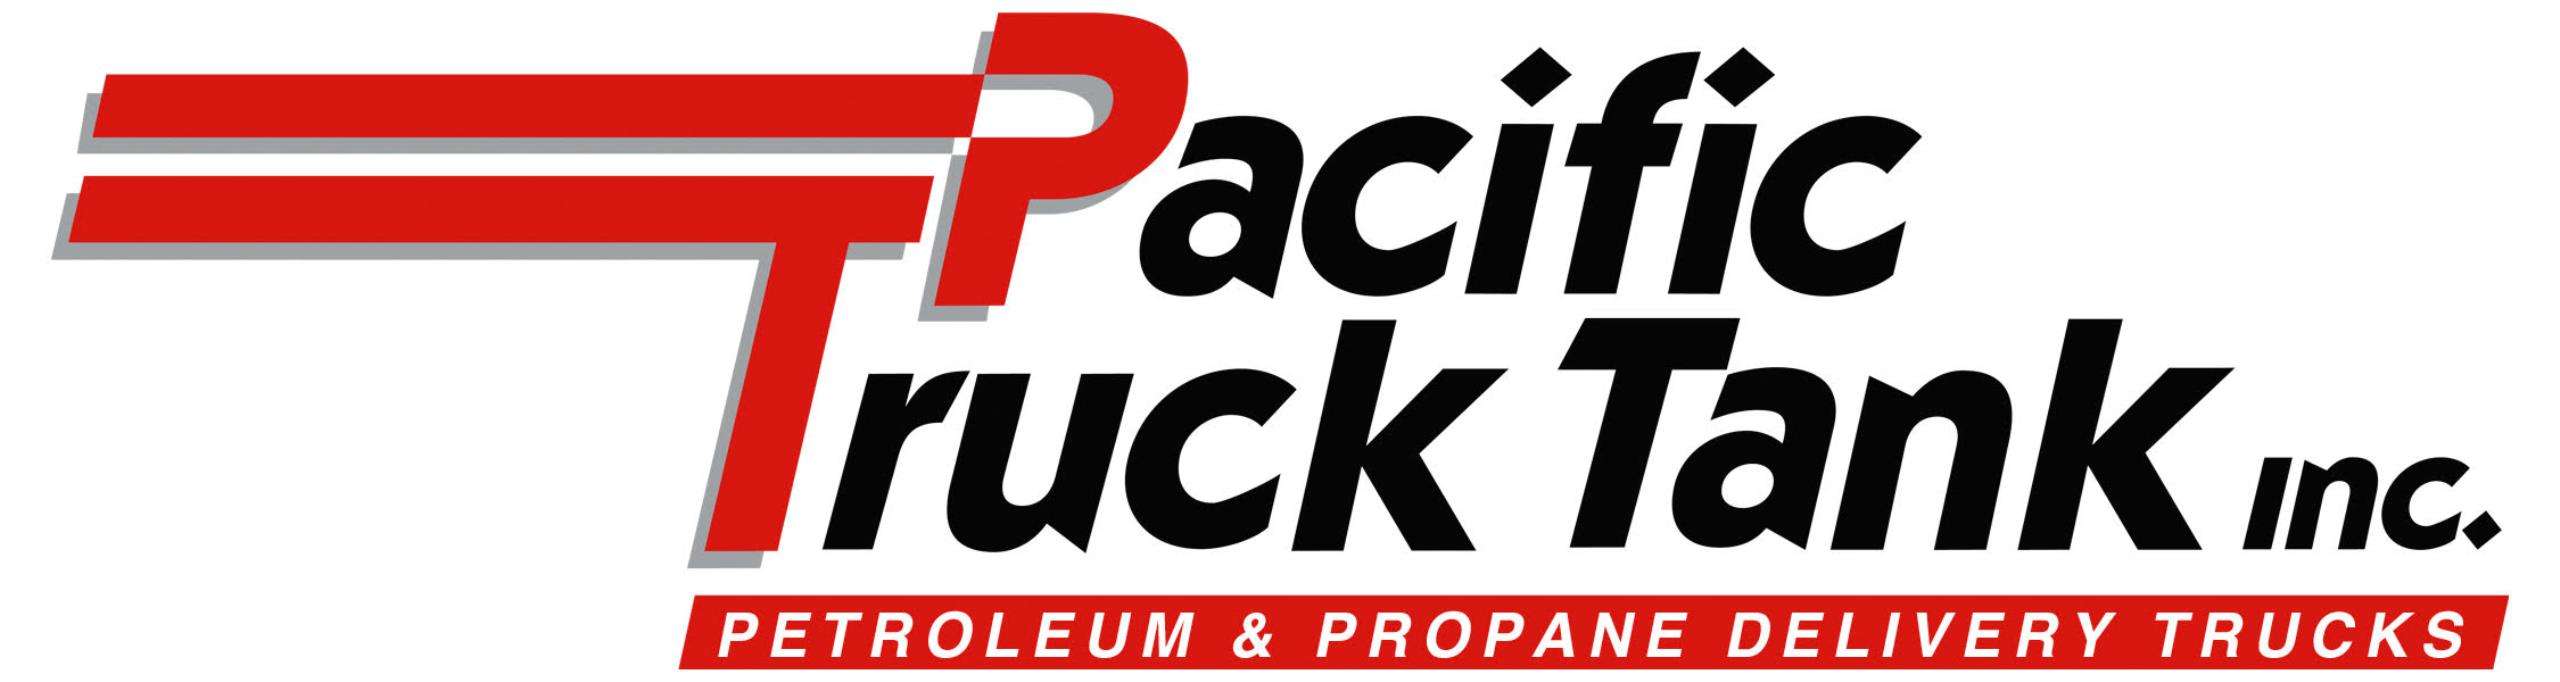 Pacific Truck Tank, Inc. Logo